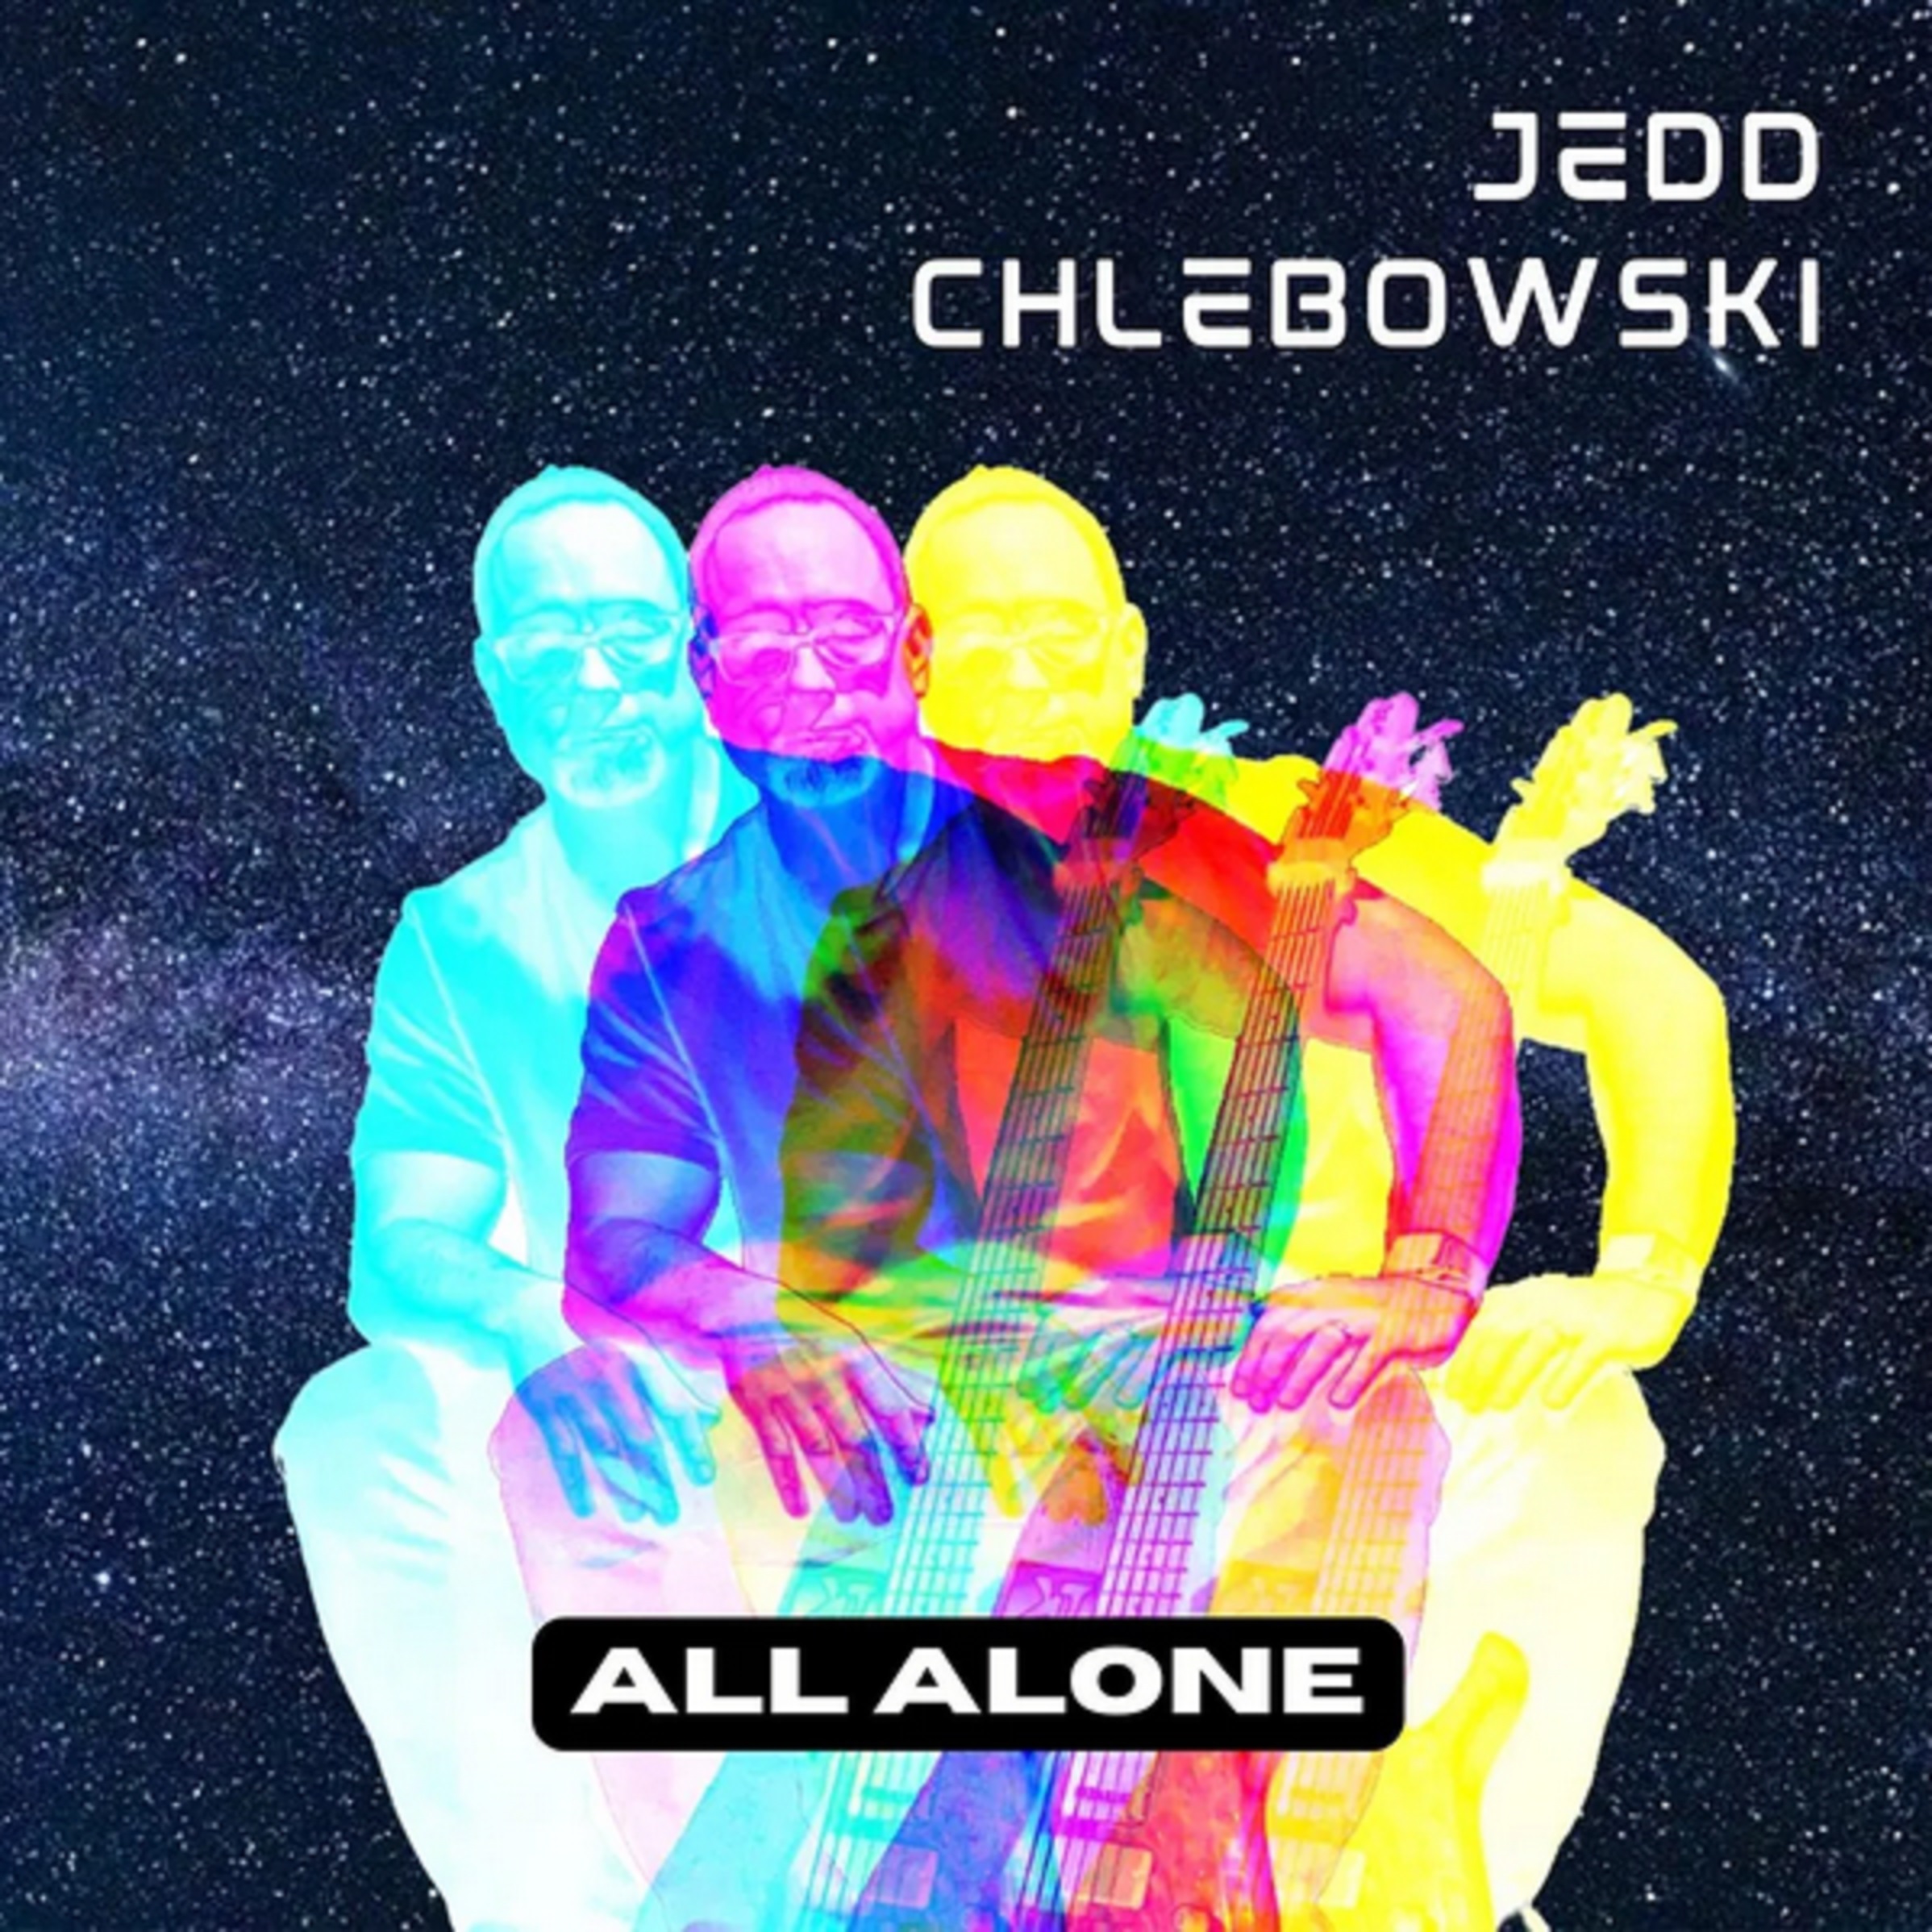 Jedd Chlebowski Releases Solo Bass CD, “All Alone”